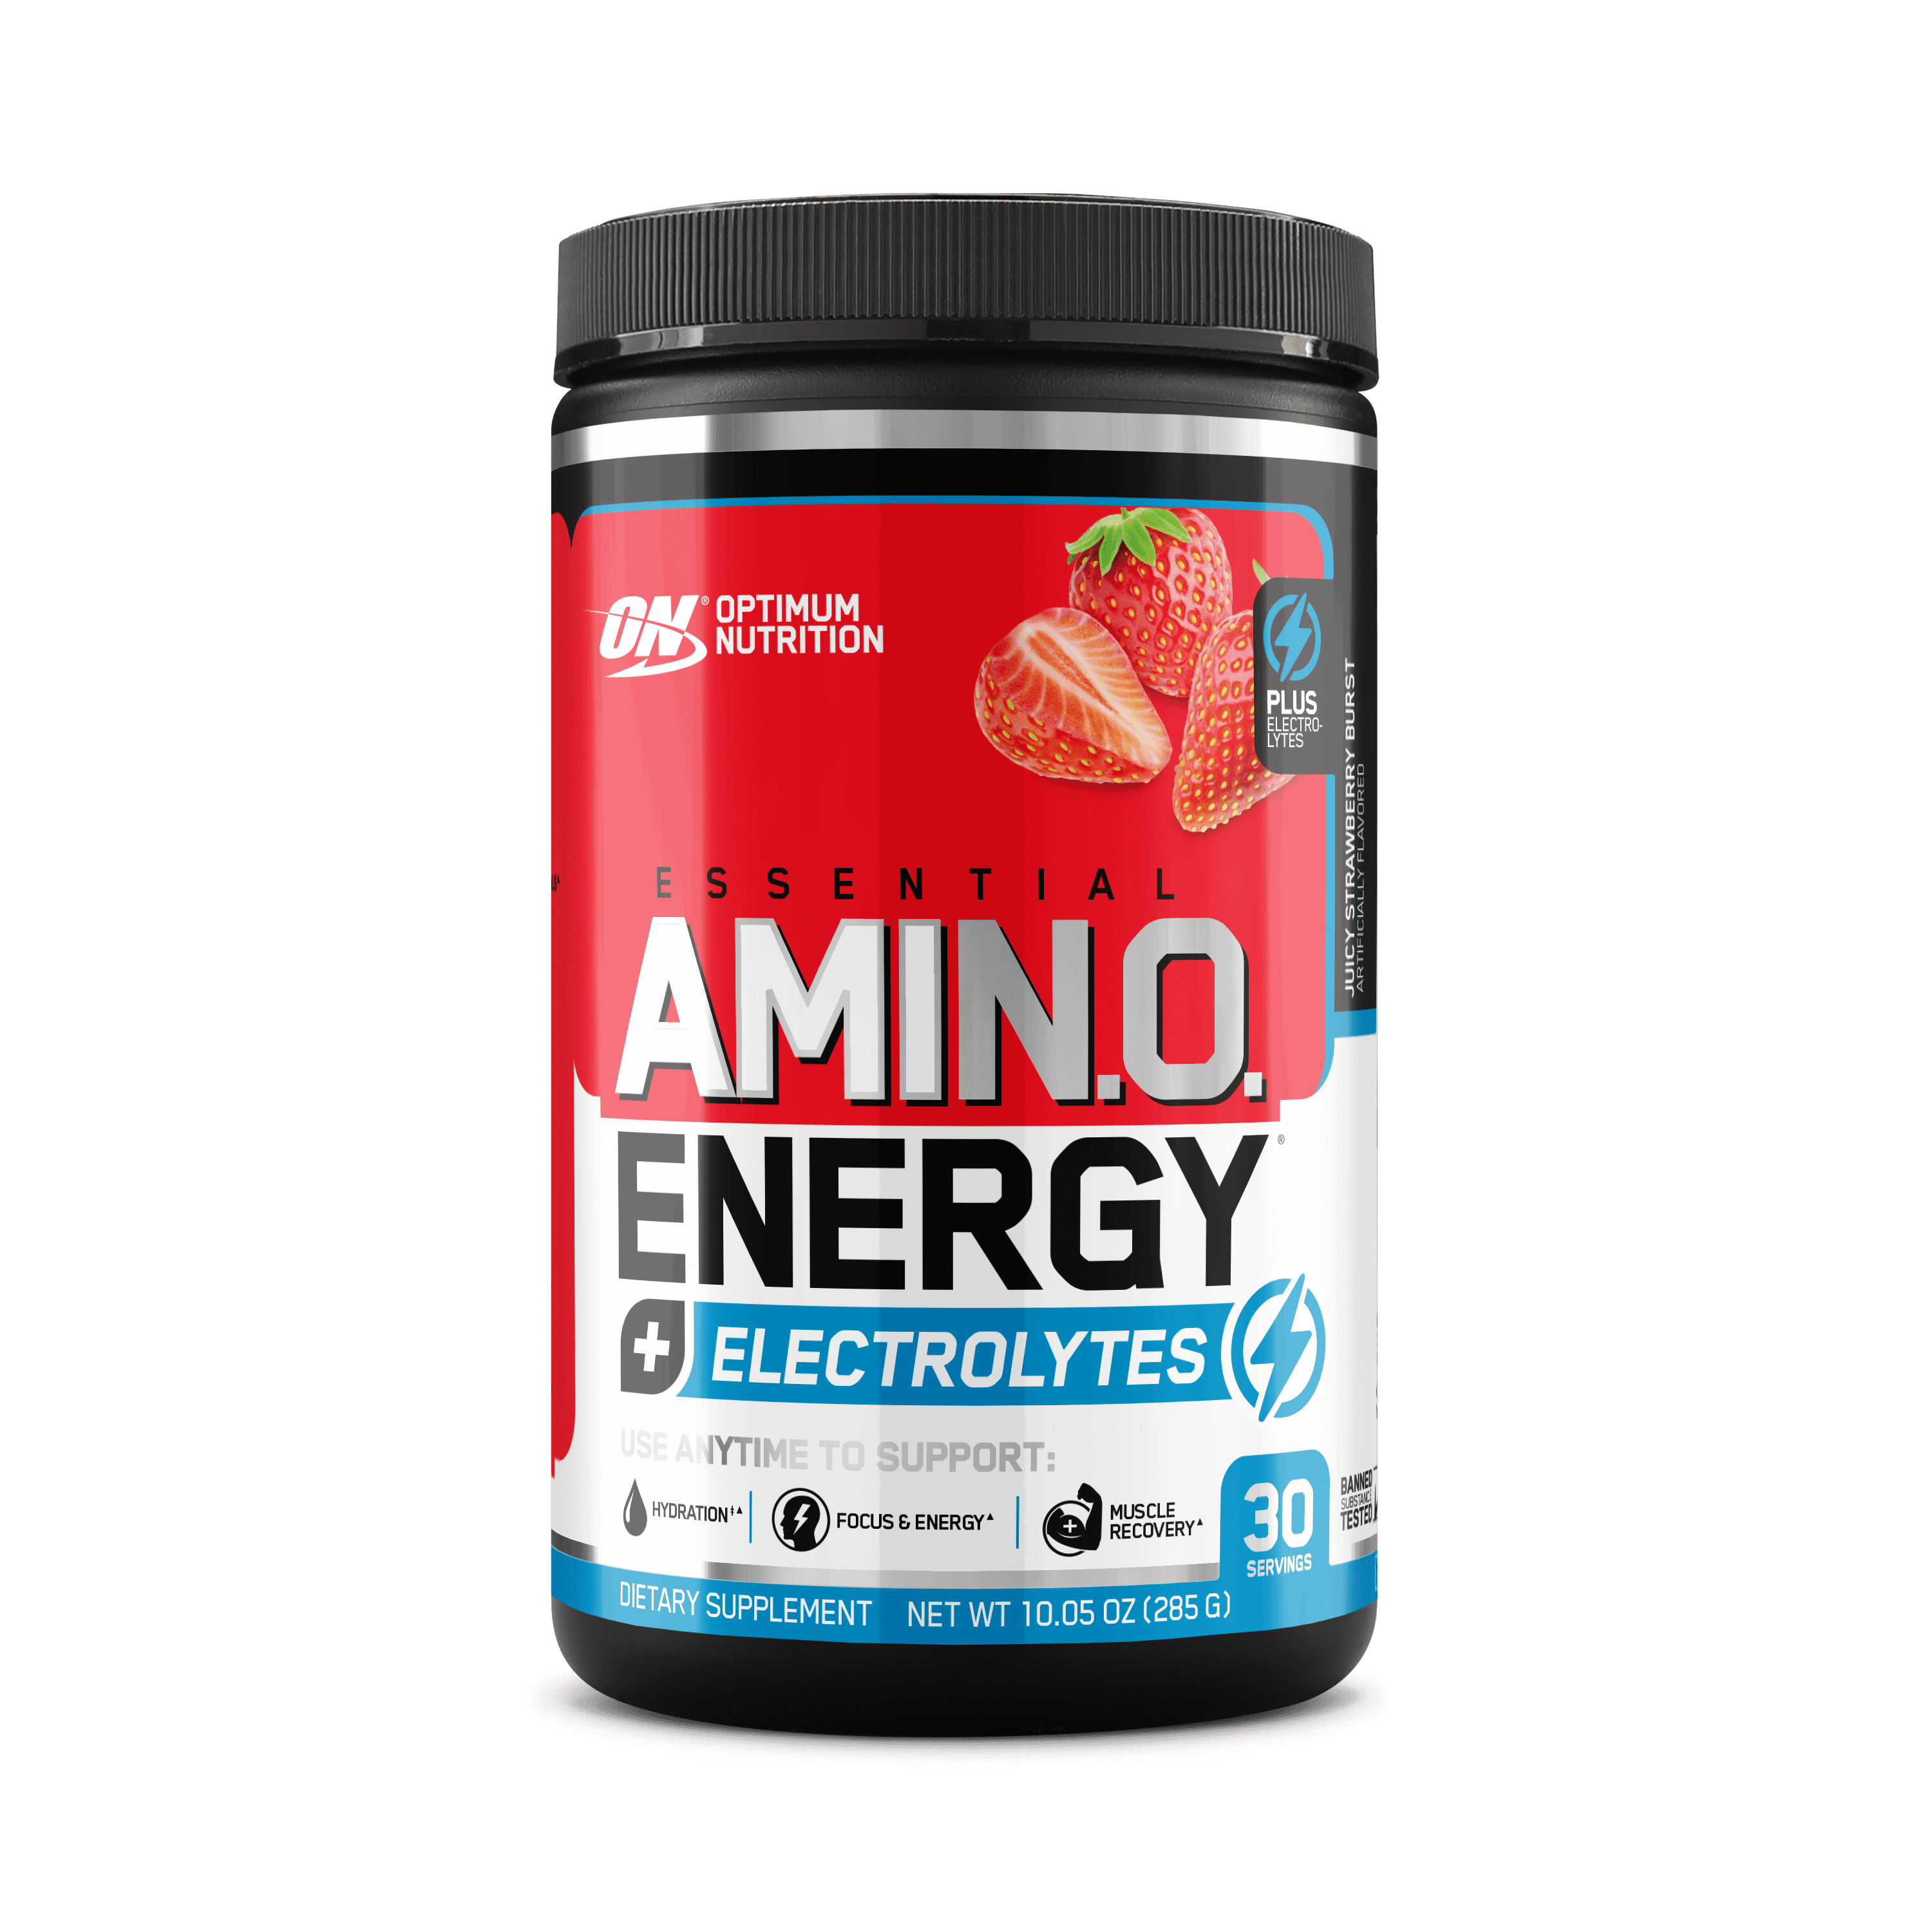 Аминокислоты nutrition. Amino Energy Optimum Nutrition. Amino Amino. EAA Energy Optimum Nutrition аминокислоты. Amino Energy Electrolytes.